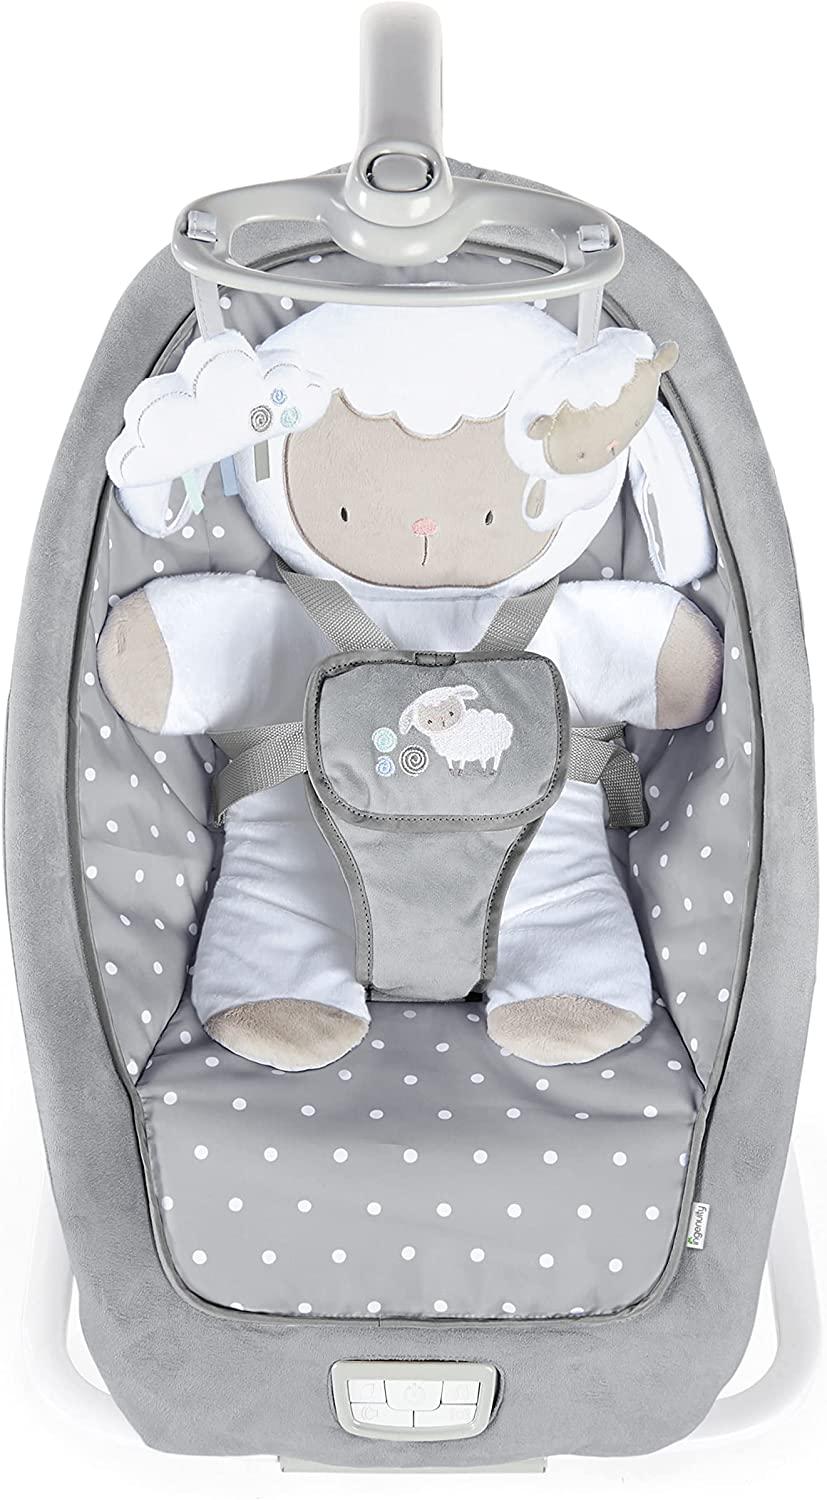 Selected image for KIDS II Ingenity Ležaljka za bebe Rocking seat Cuddle Lamb sivo-bela